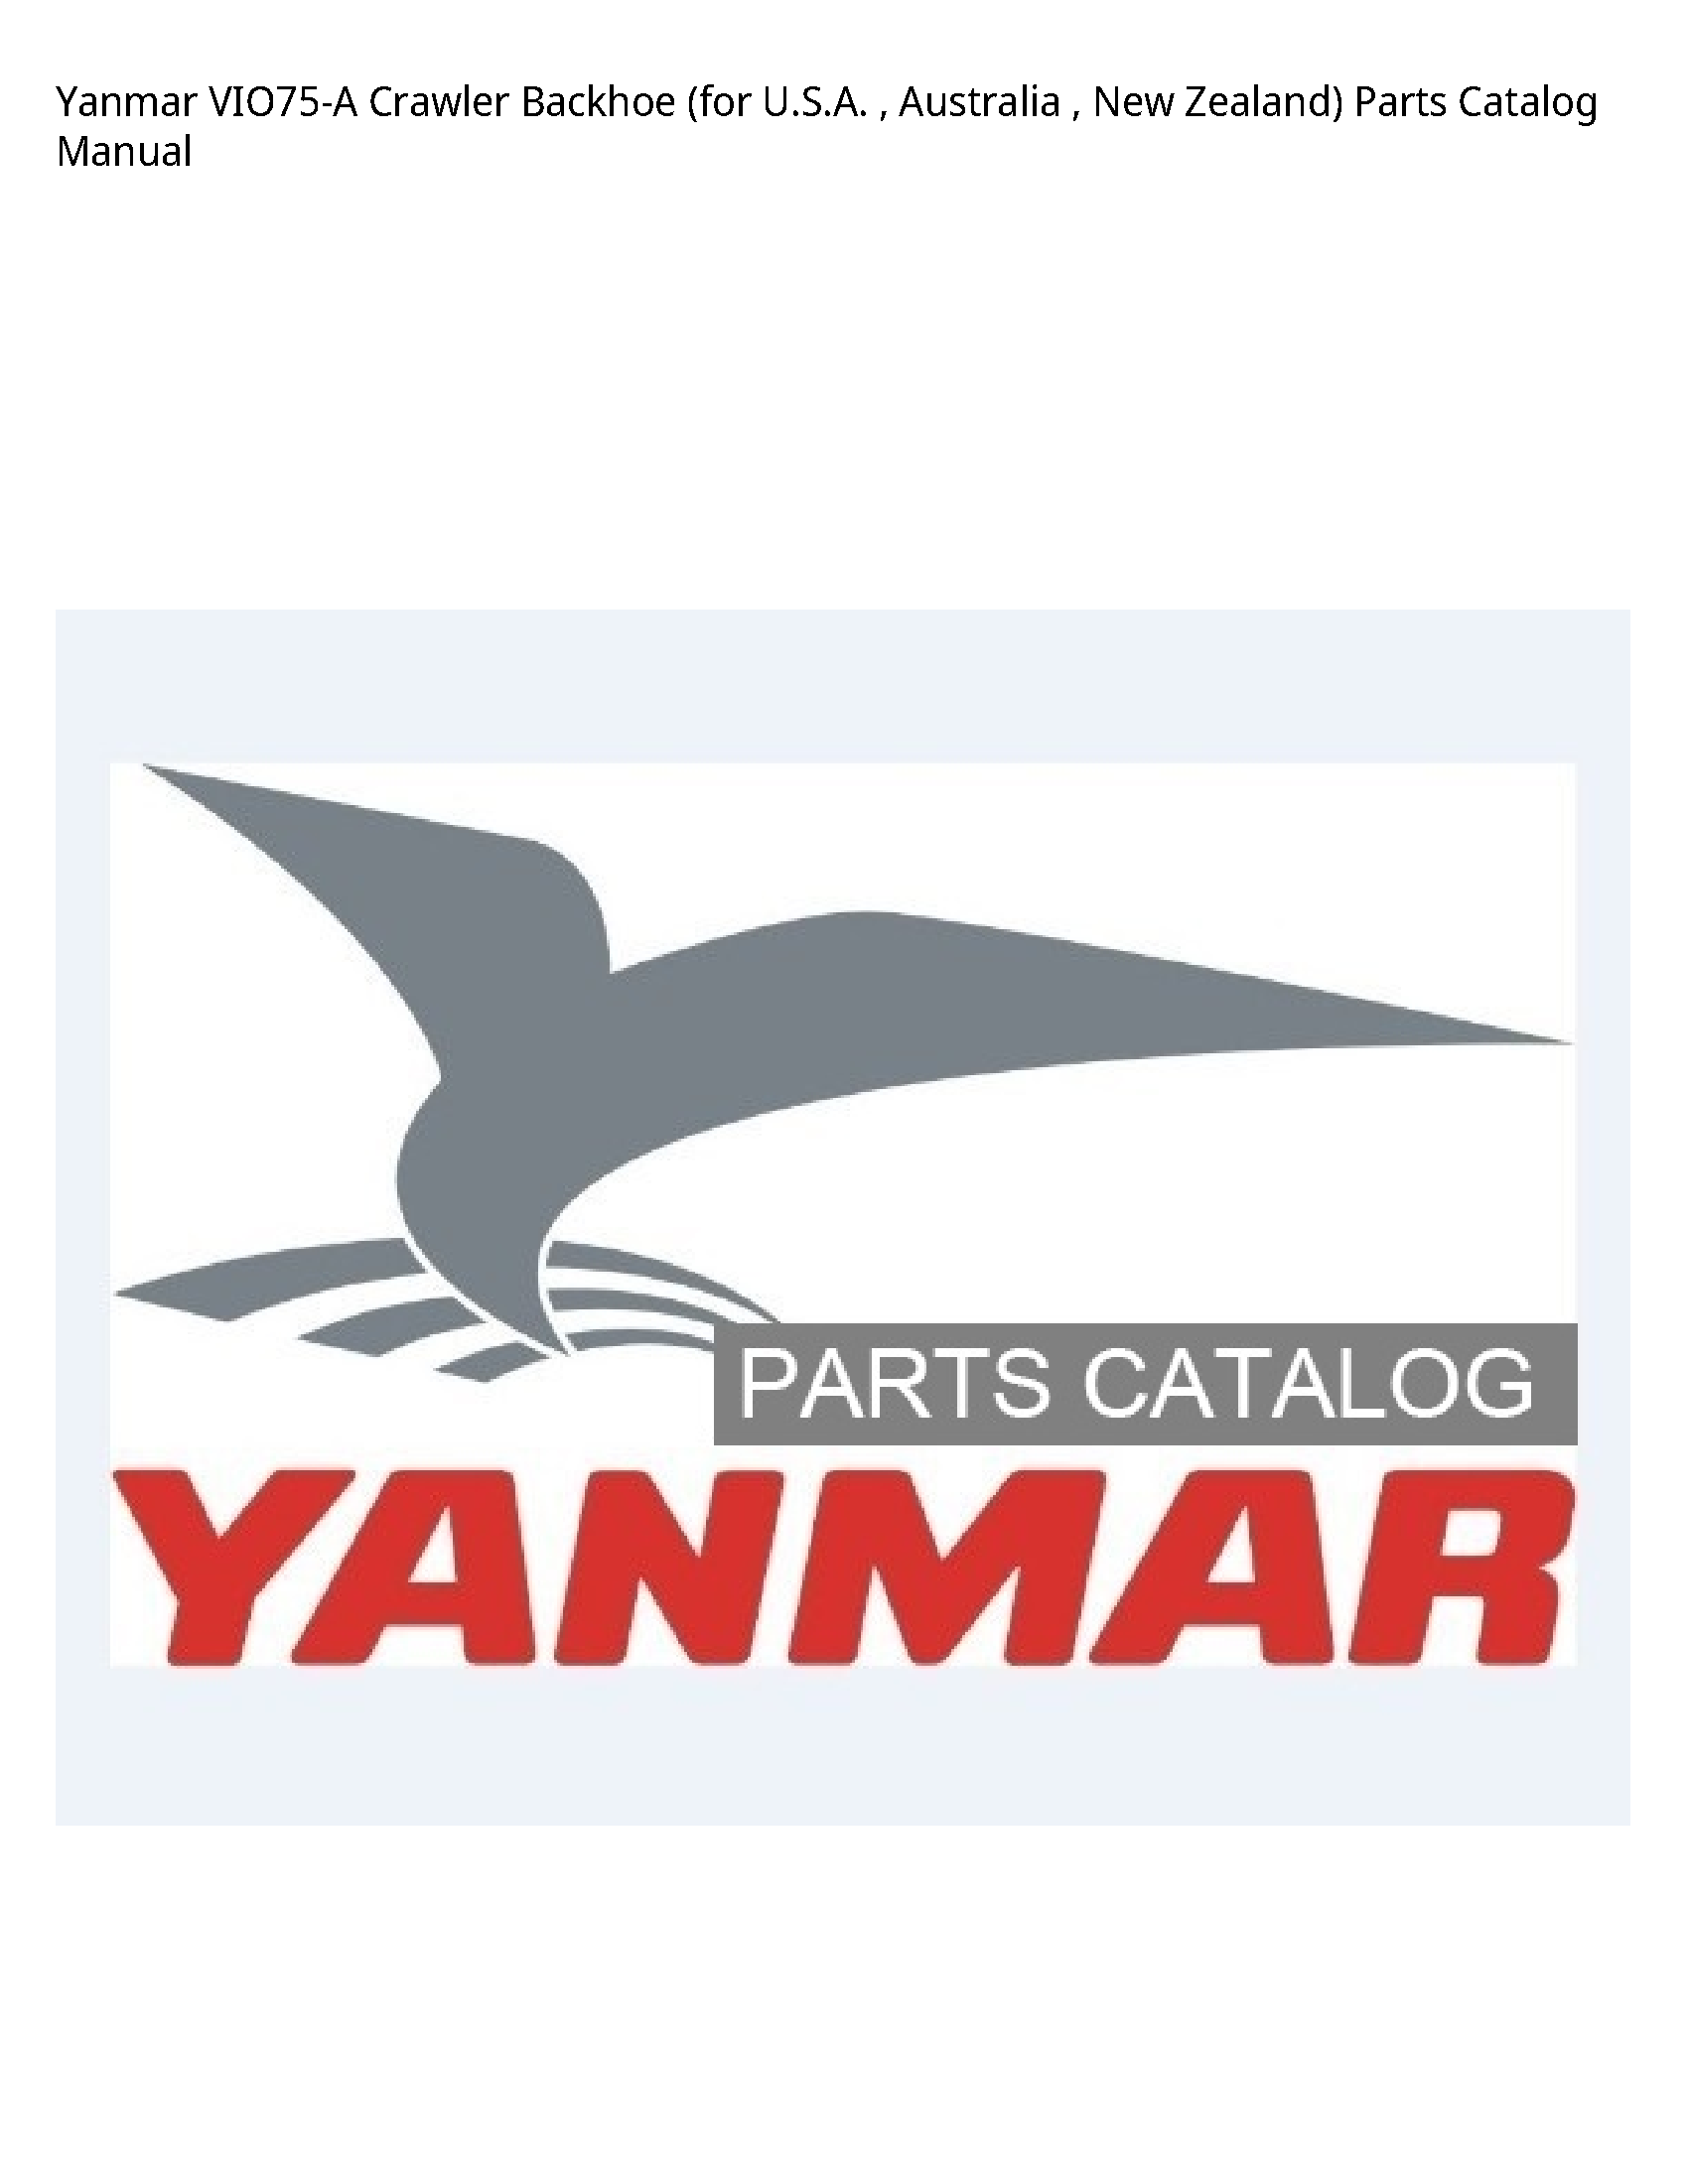 Yanmar VIO75-A Crawler Backhoe (for U.S.A. Australia New Zealand) Parts Catalog manual